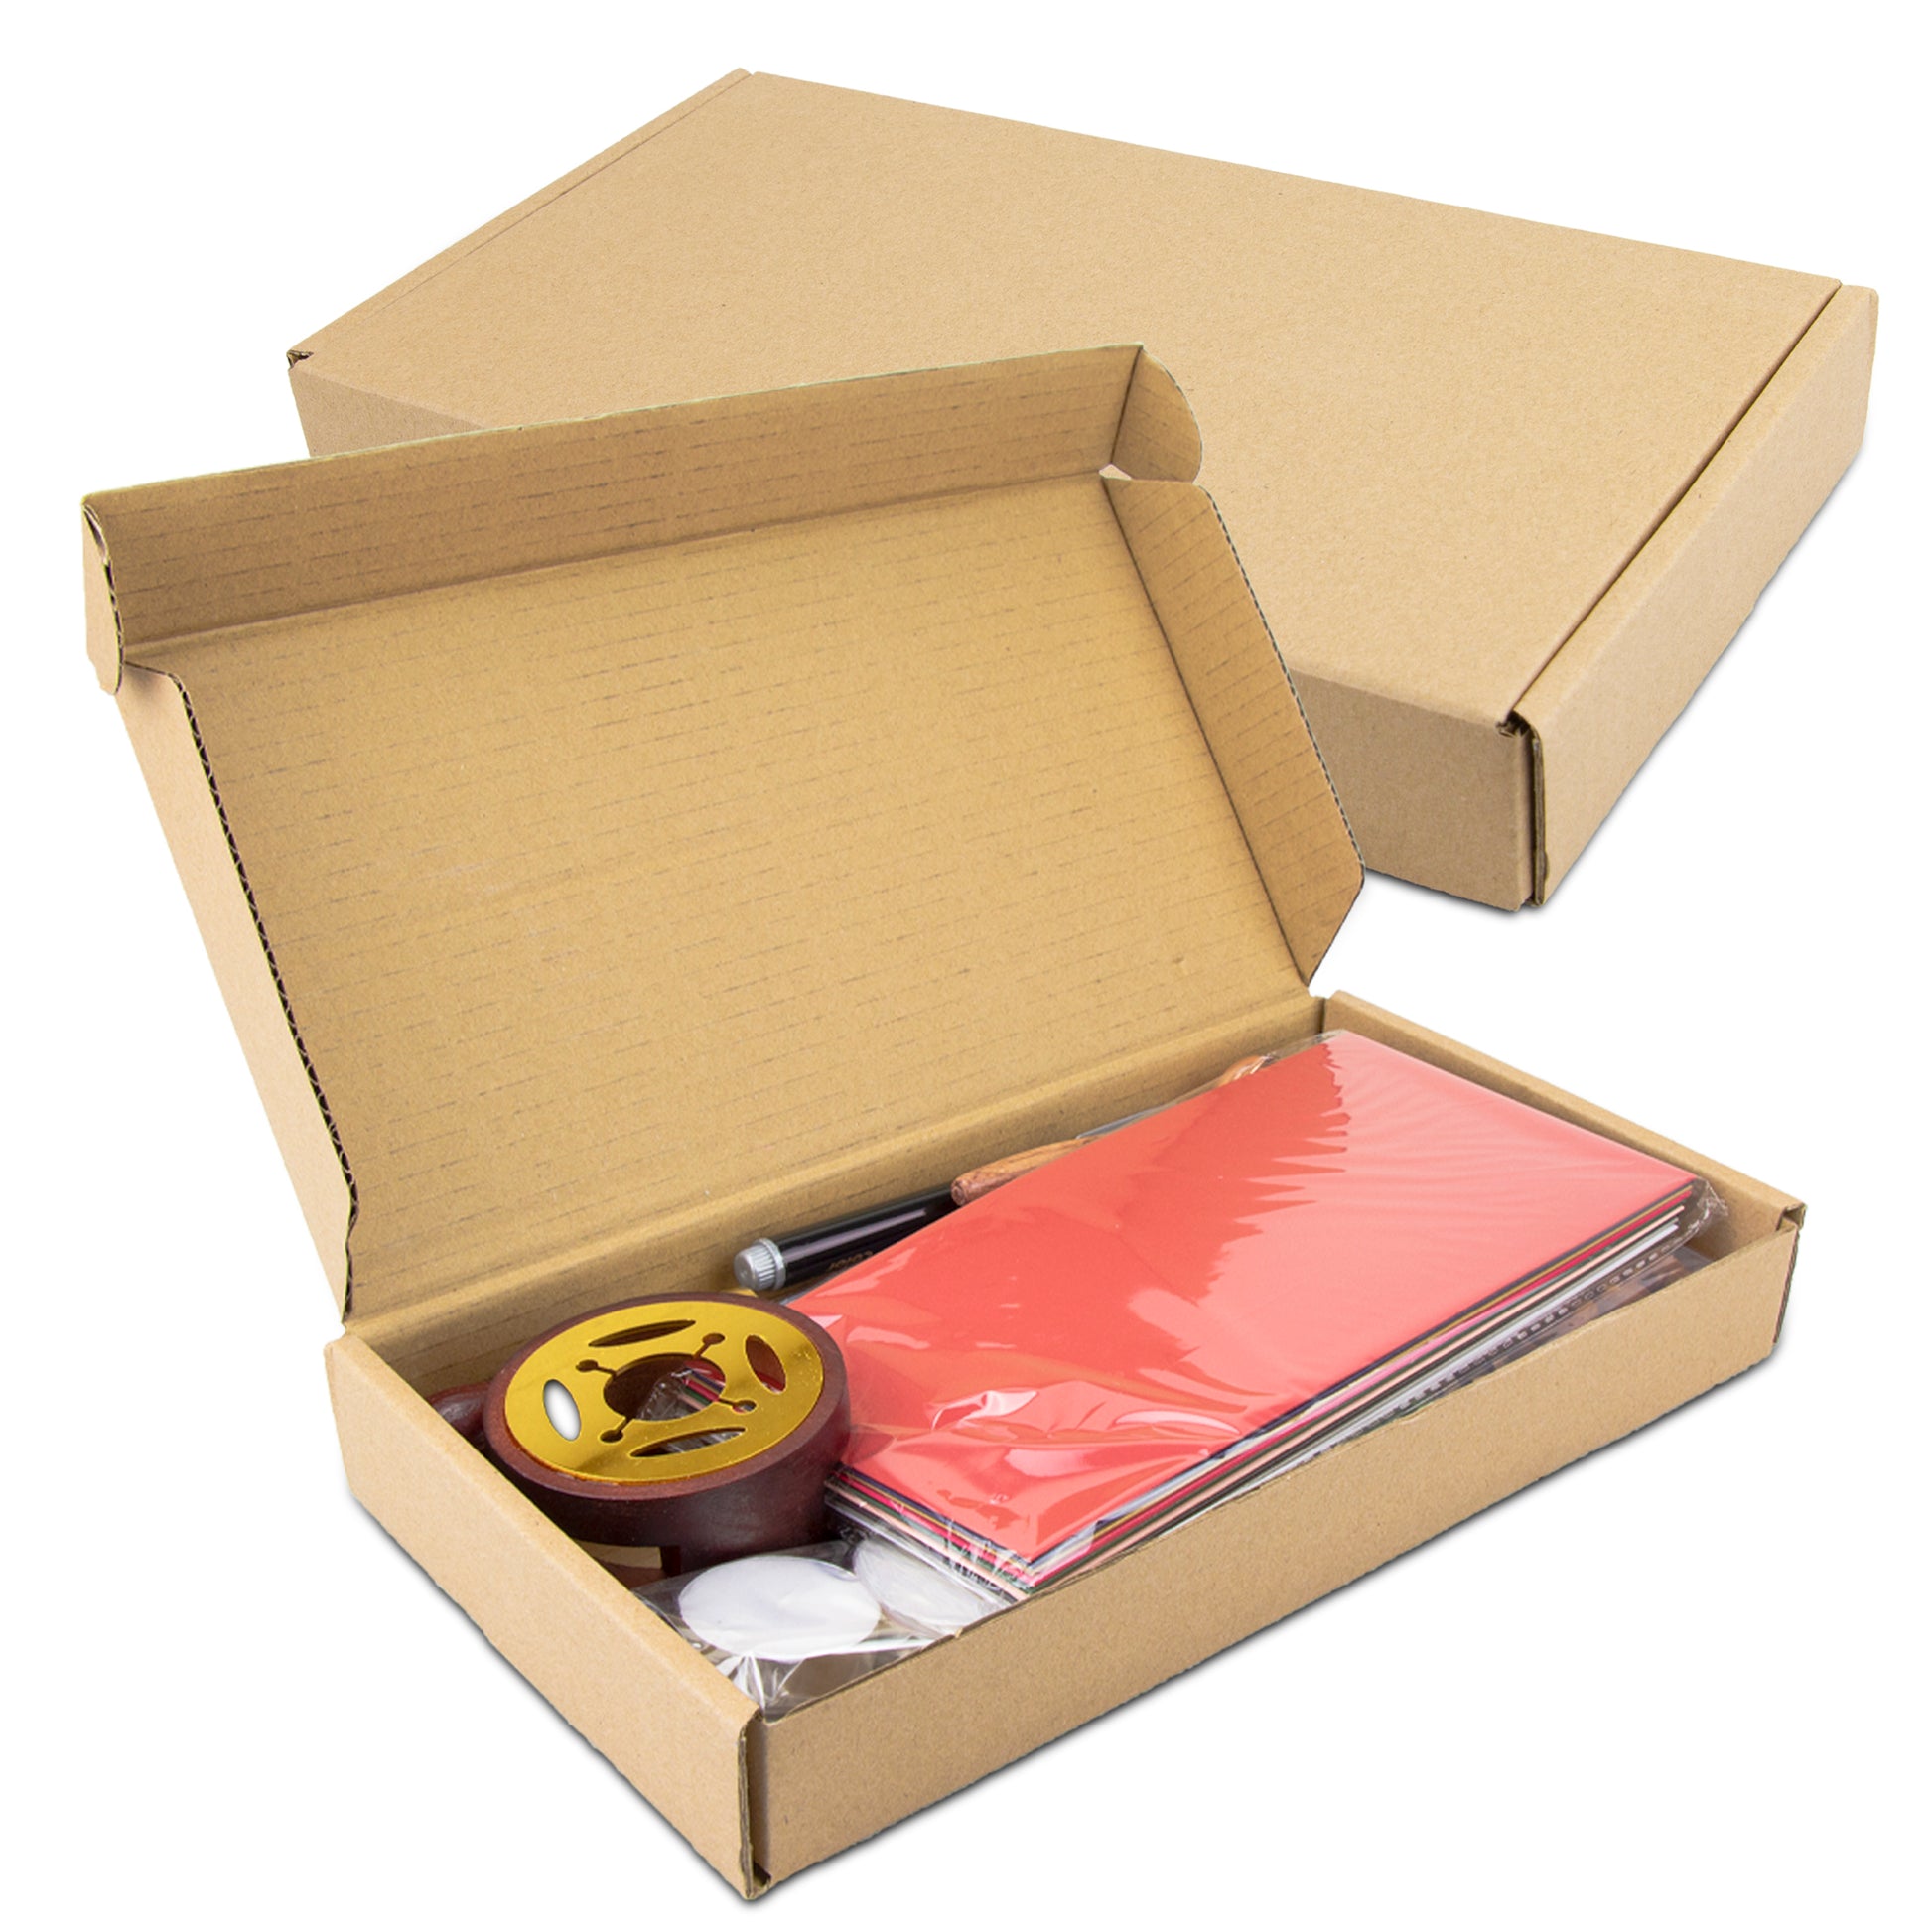 LAECHATAR Wax Seal Kit with Gift Box, 648 Pcs Wax Seal Beads, Wax